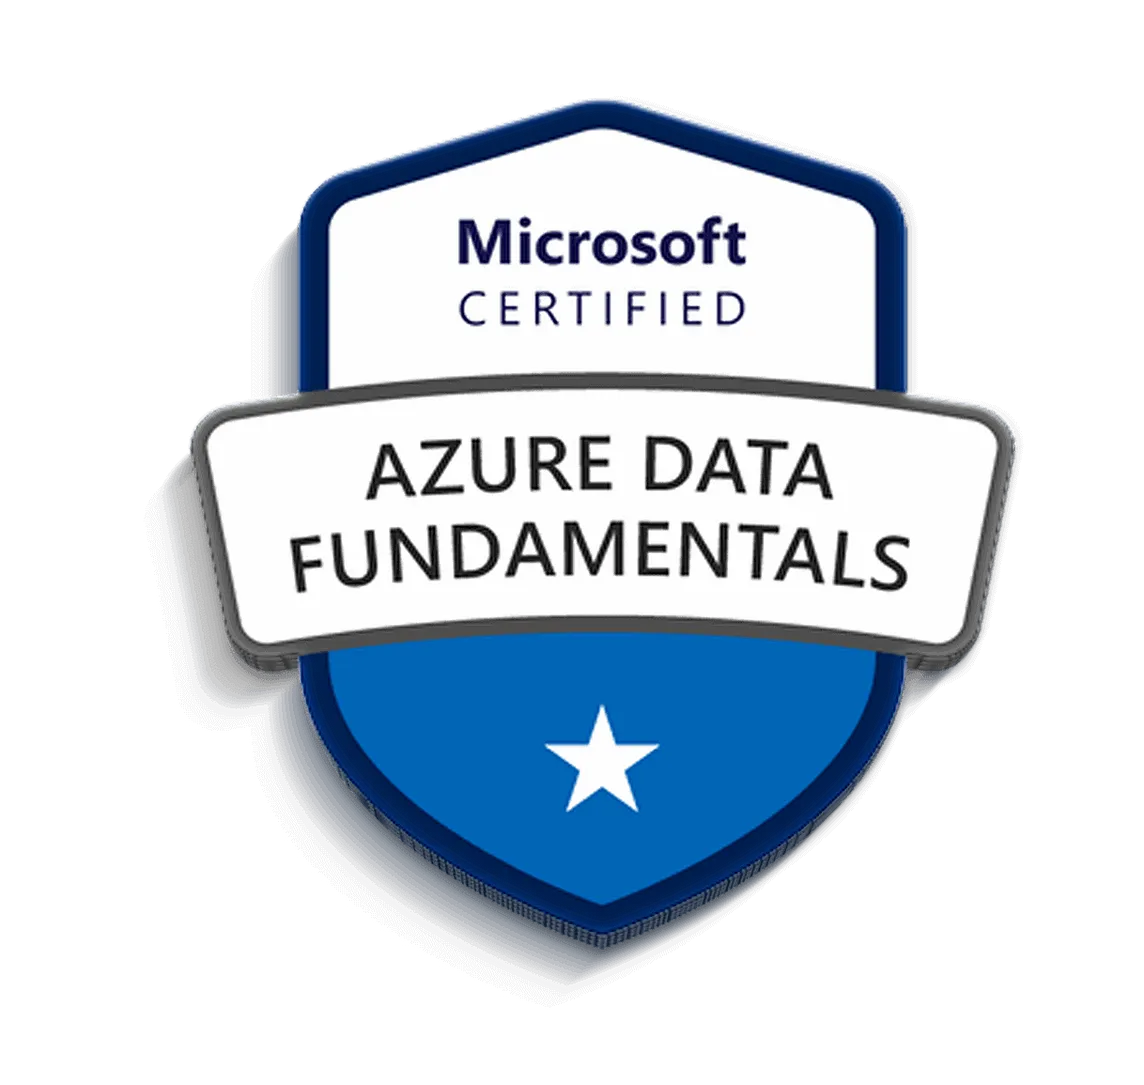 Microsoft Certified Azure Data Fundamentals logo